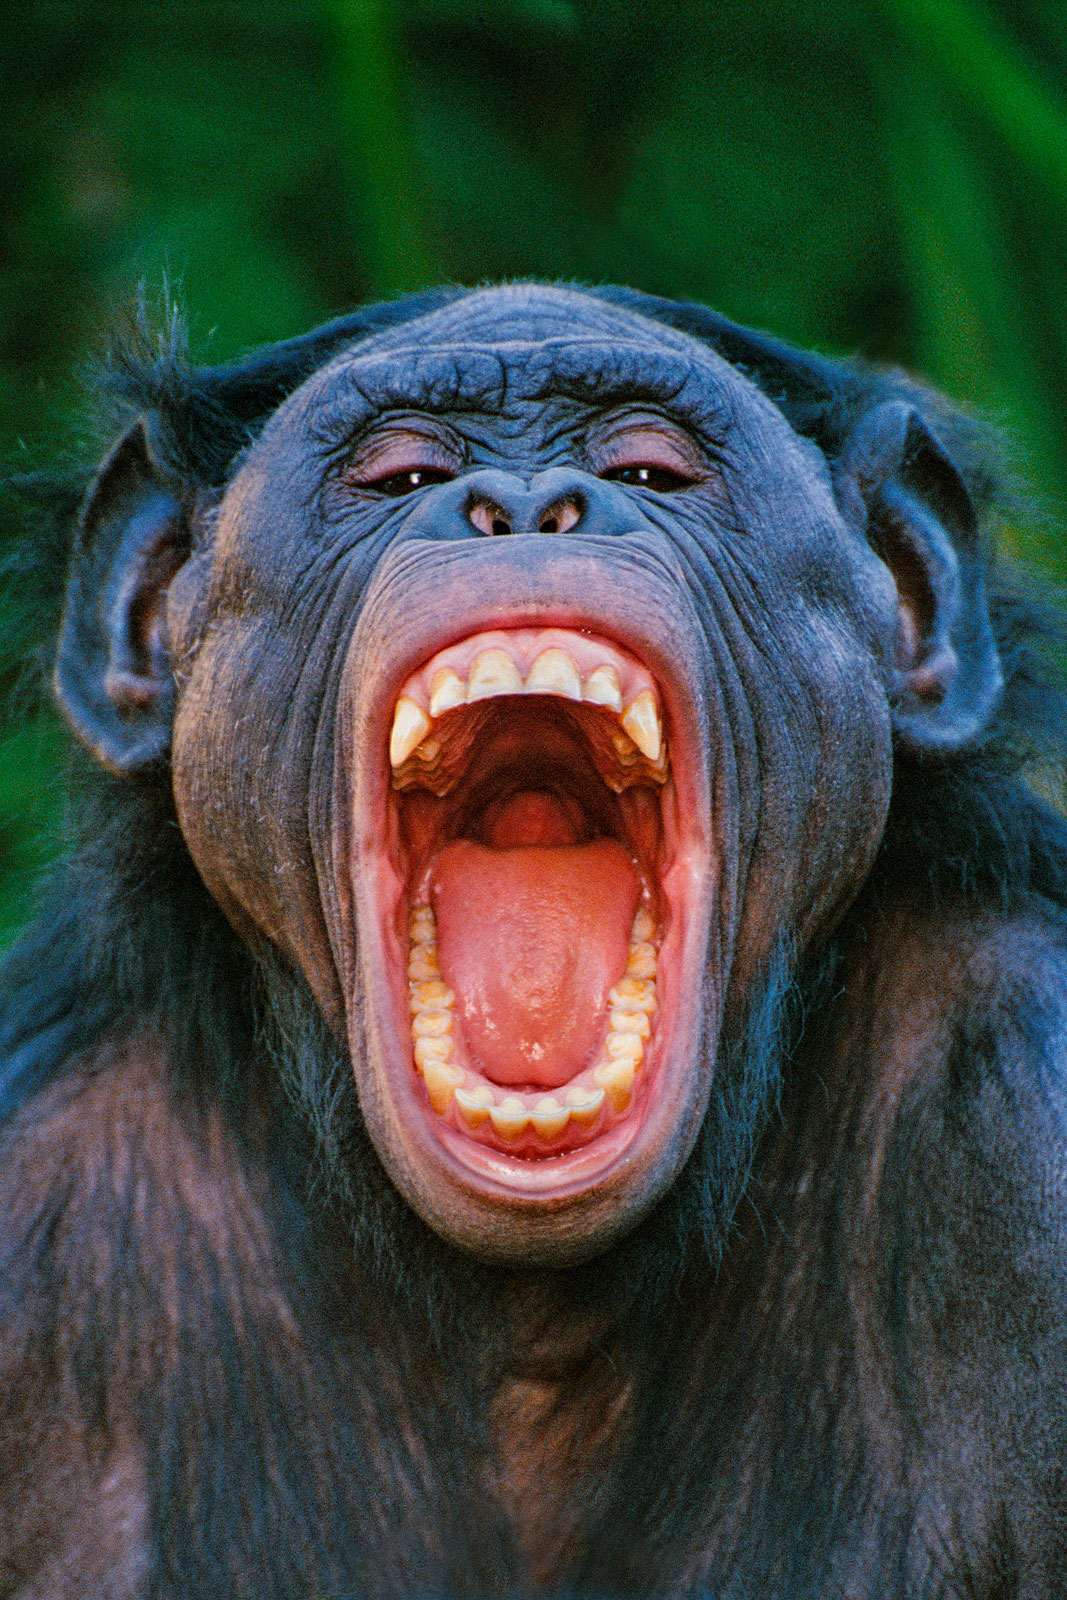 Bonobo grimacing, native to Congo (DRC)